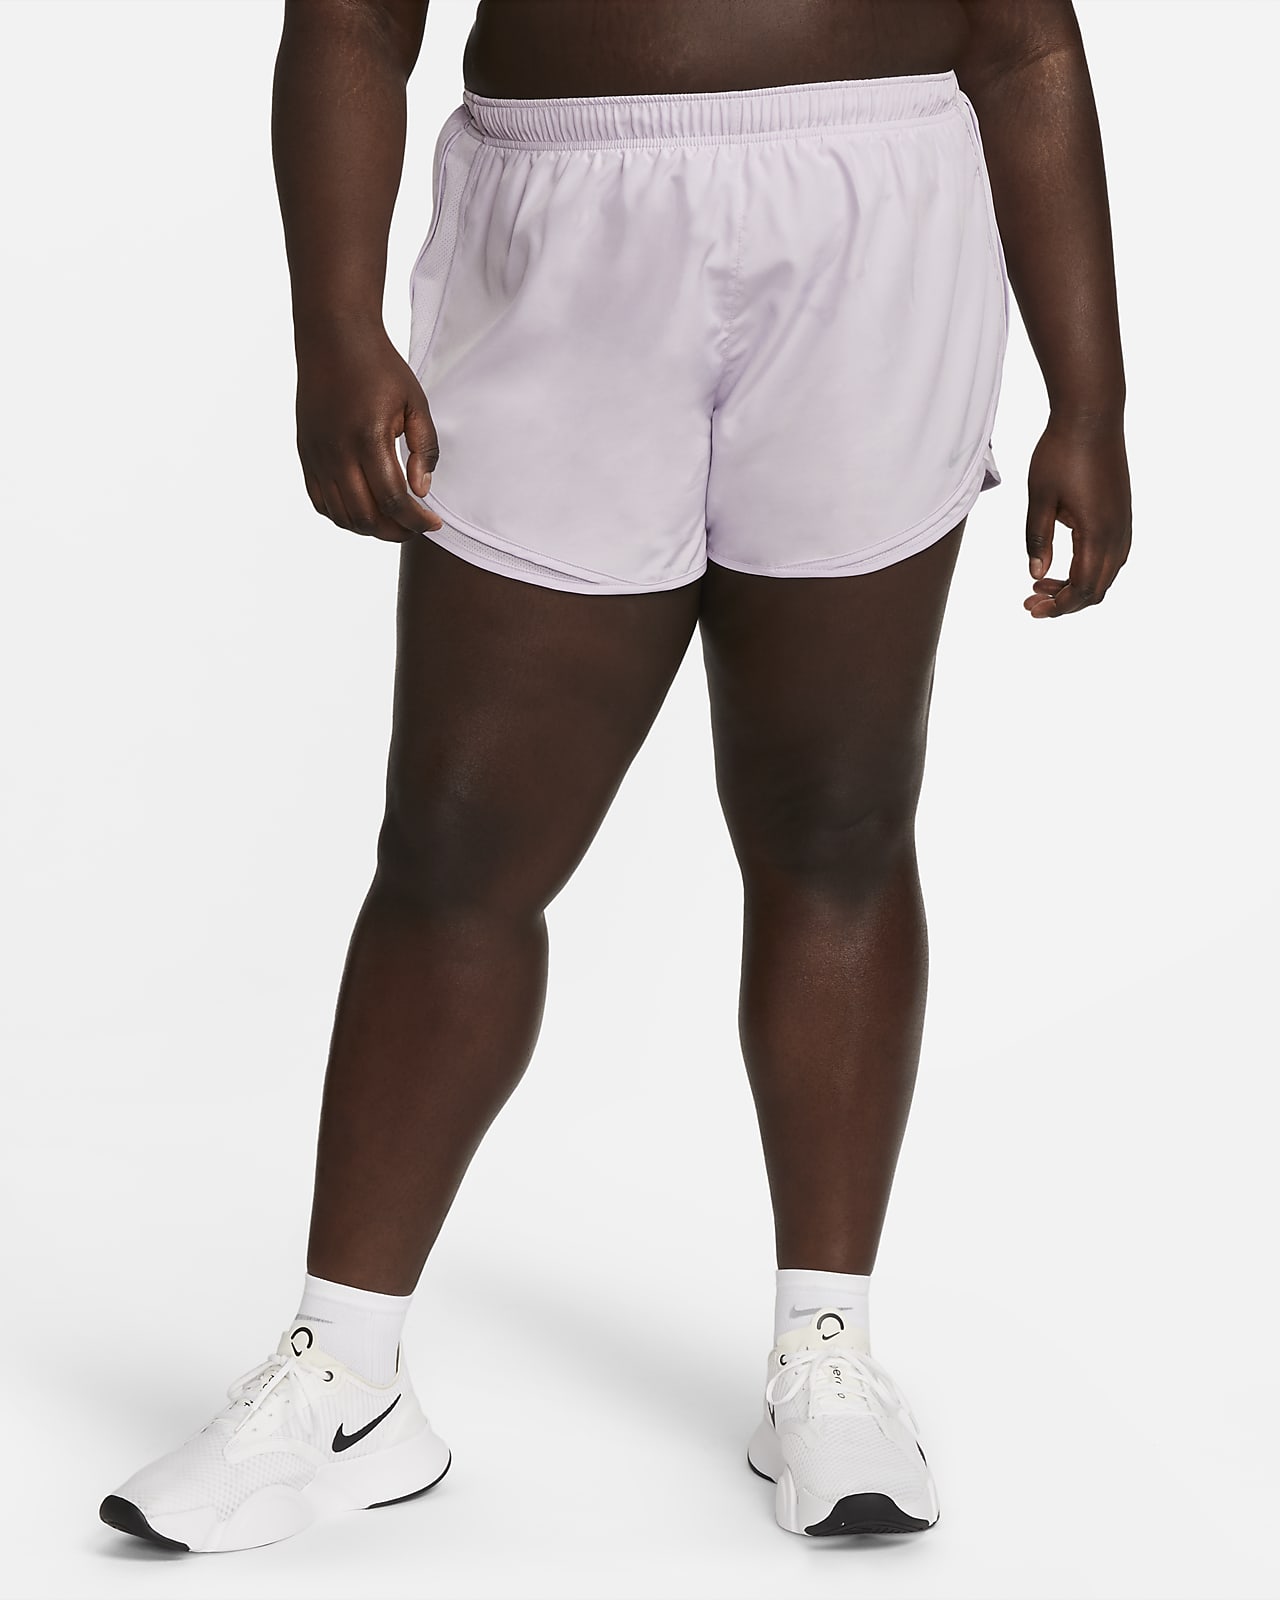 Shorts de running para mujer Nike Tempo (talla grande)